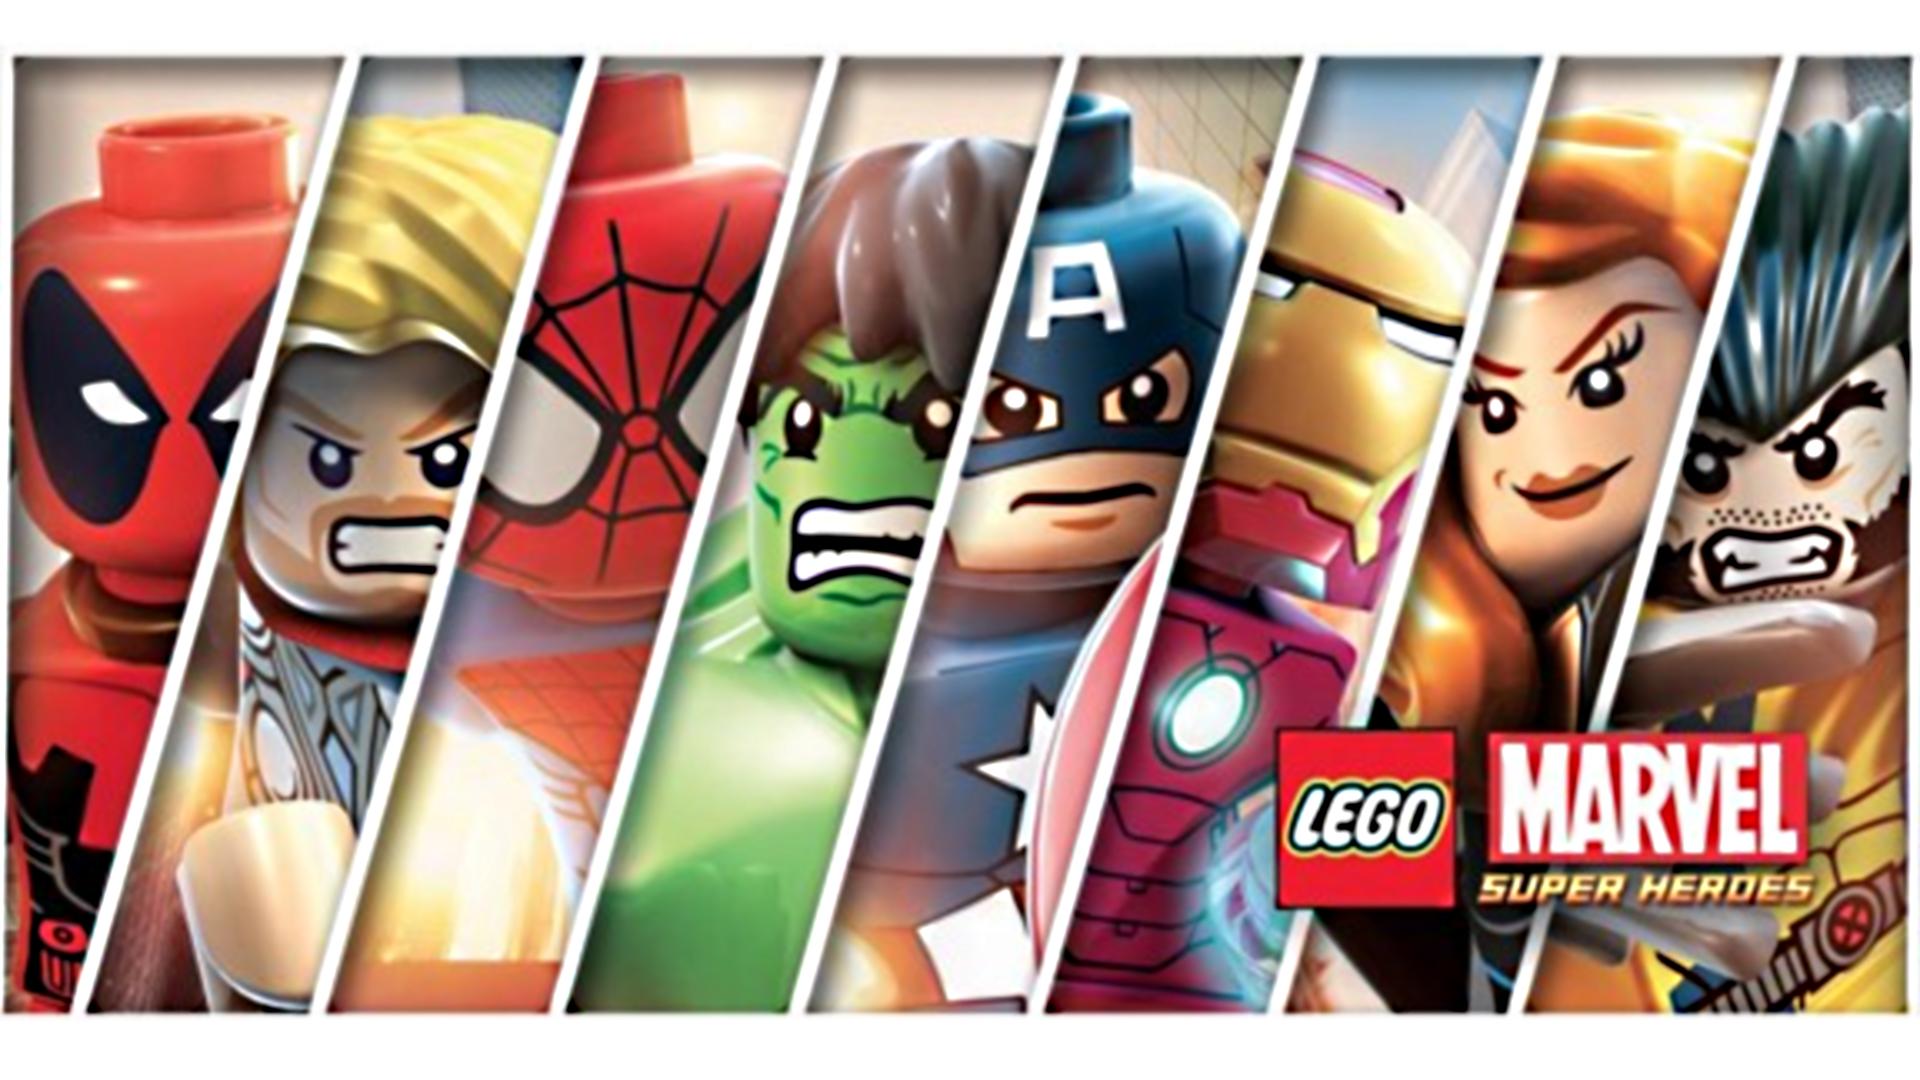 Lego Superheroes Wallpapers 1920x1080 19454 KB